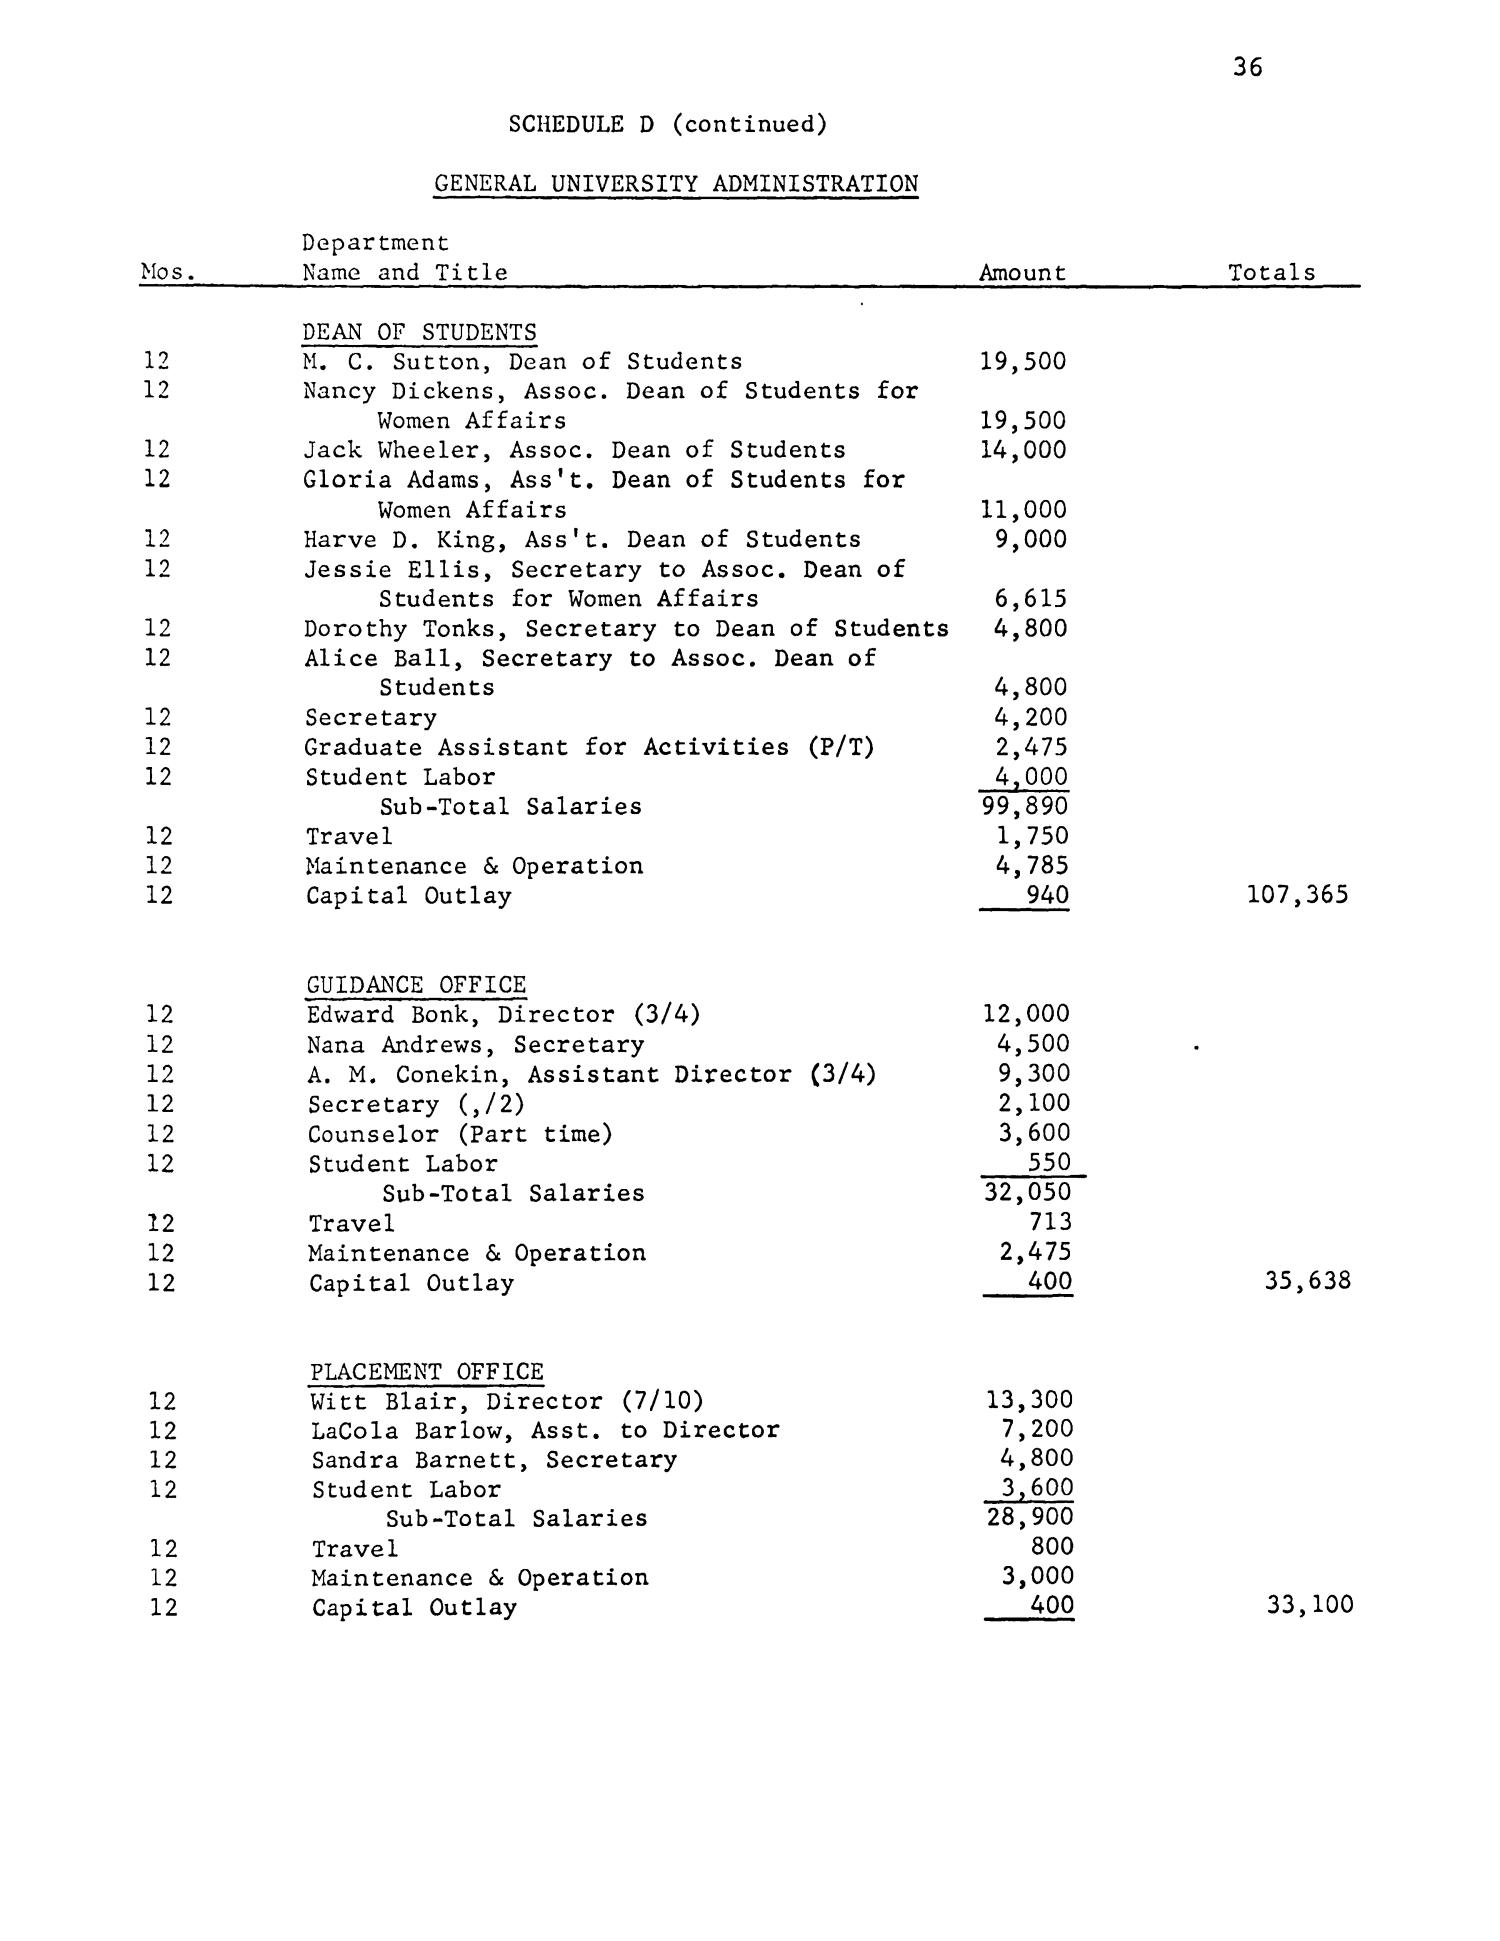 North Texas State University Budget: 1969-1970
                                                
                                                    36
                                                